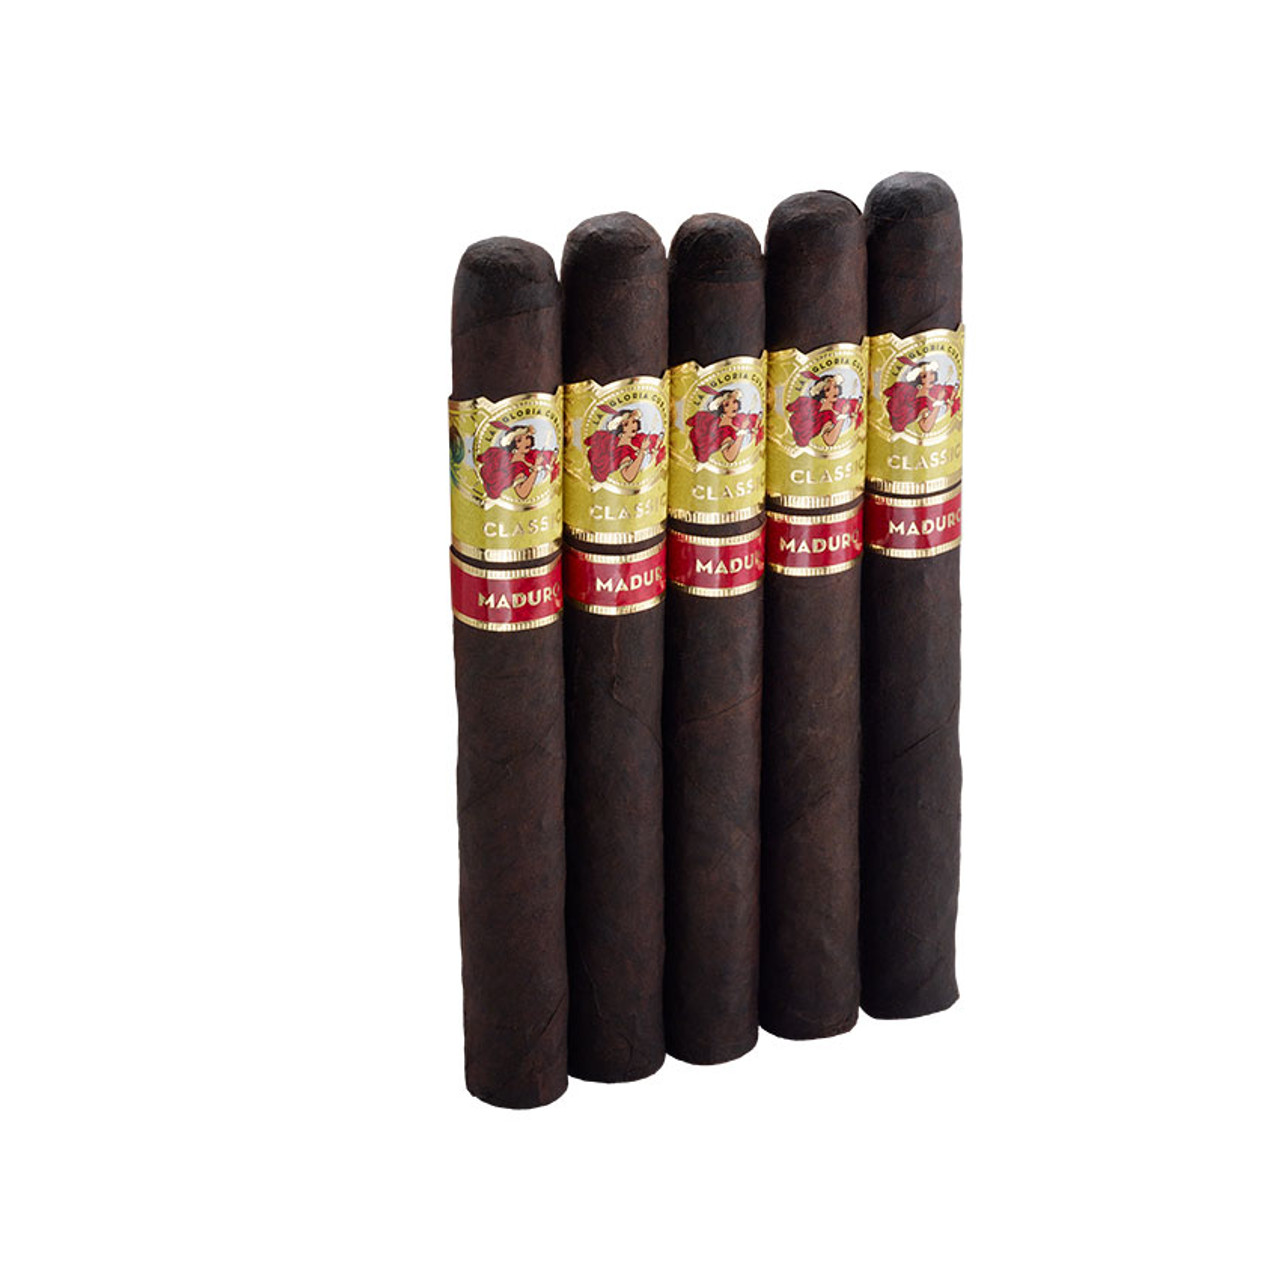 La Gloria Cubana Charlemagne Maduro Cigars - 7.25 x 54 (Pack of 5) *Box